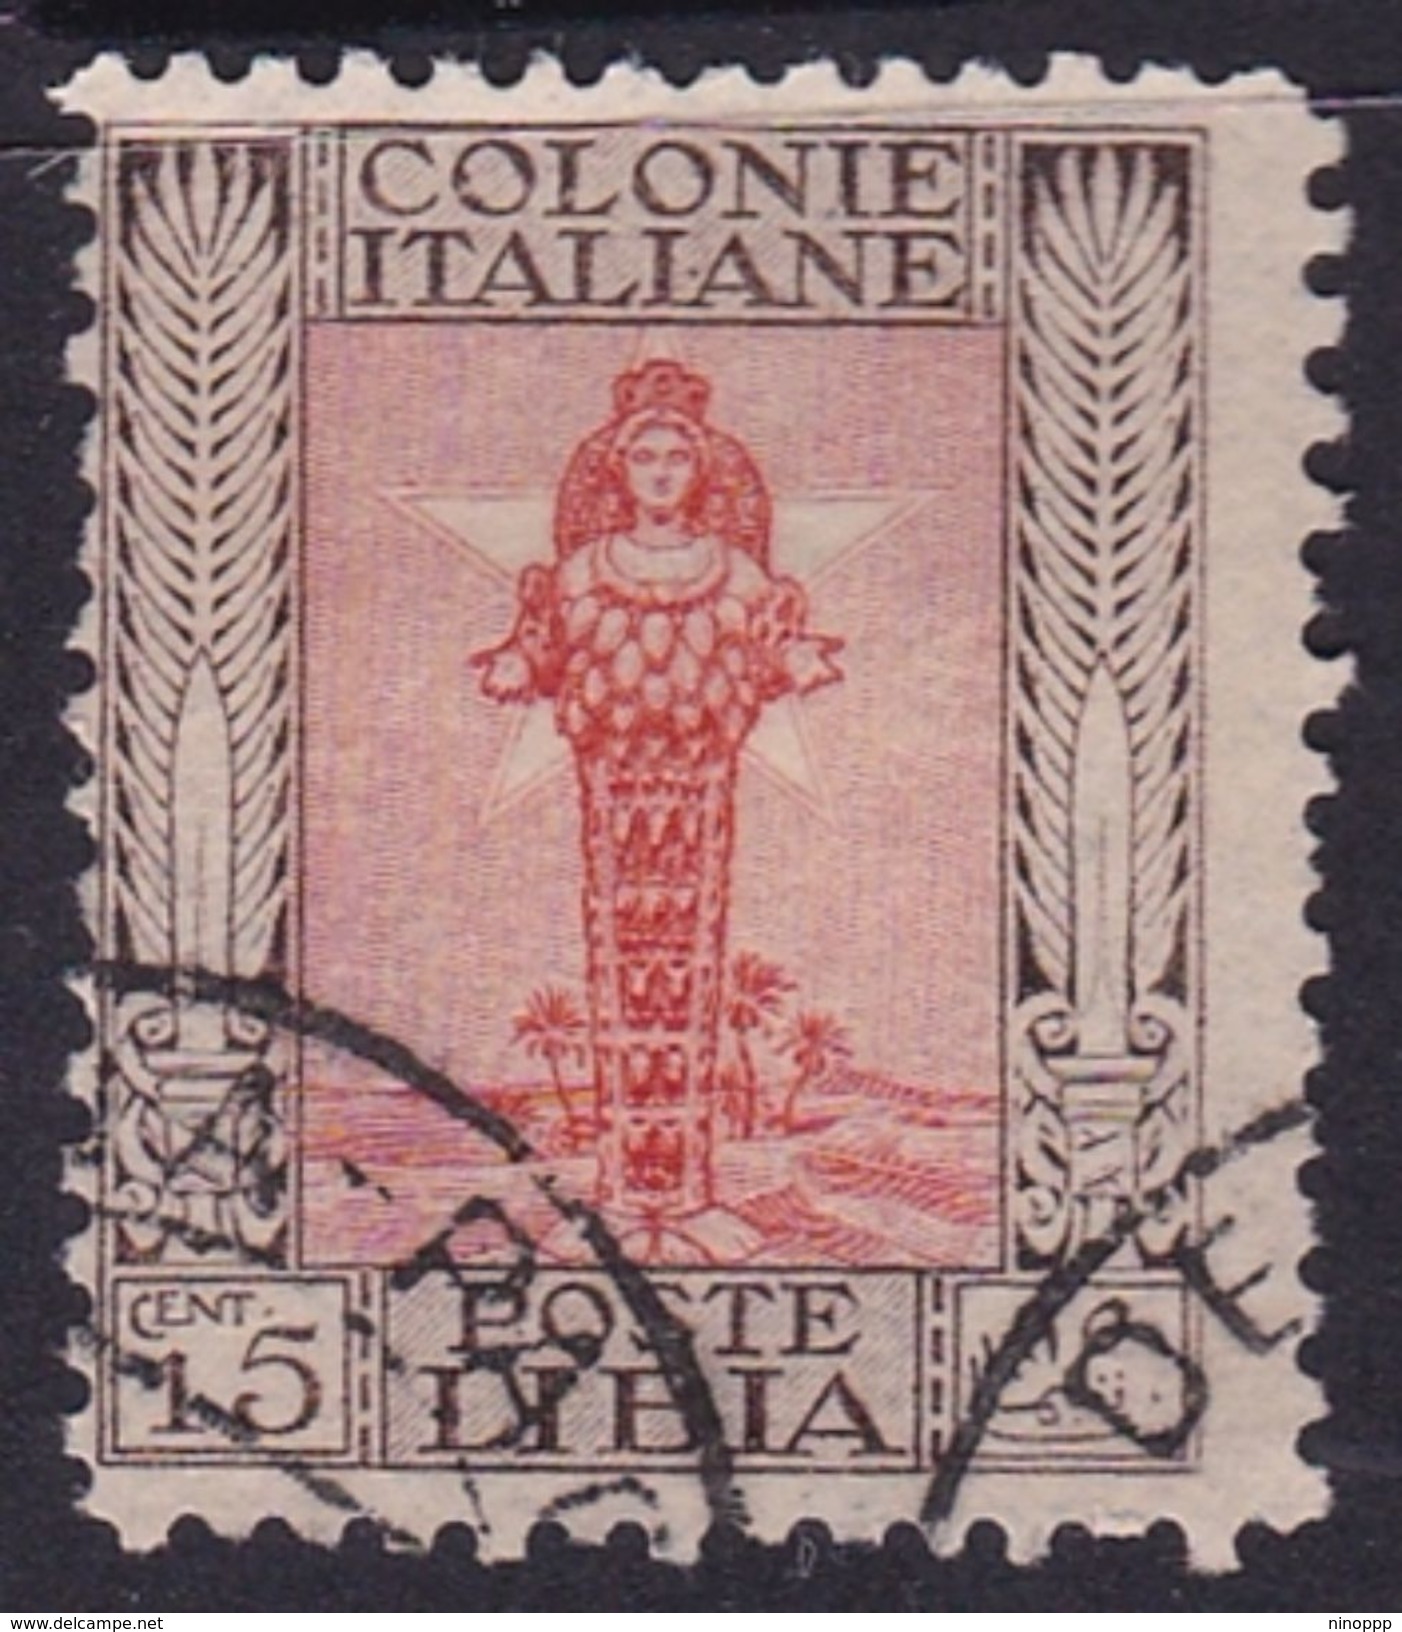 Italy-Colonies And Territories-Libya S 62 1926-30 ,Diana Of Ephesus,perf 11,15c,used - Libye